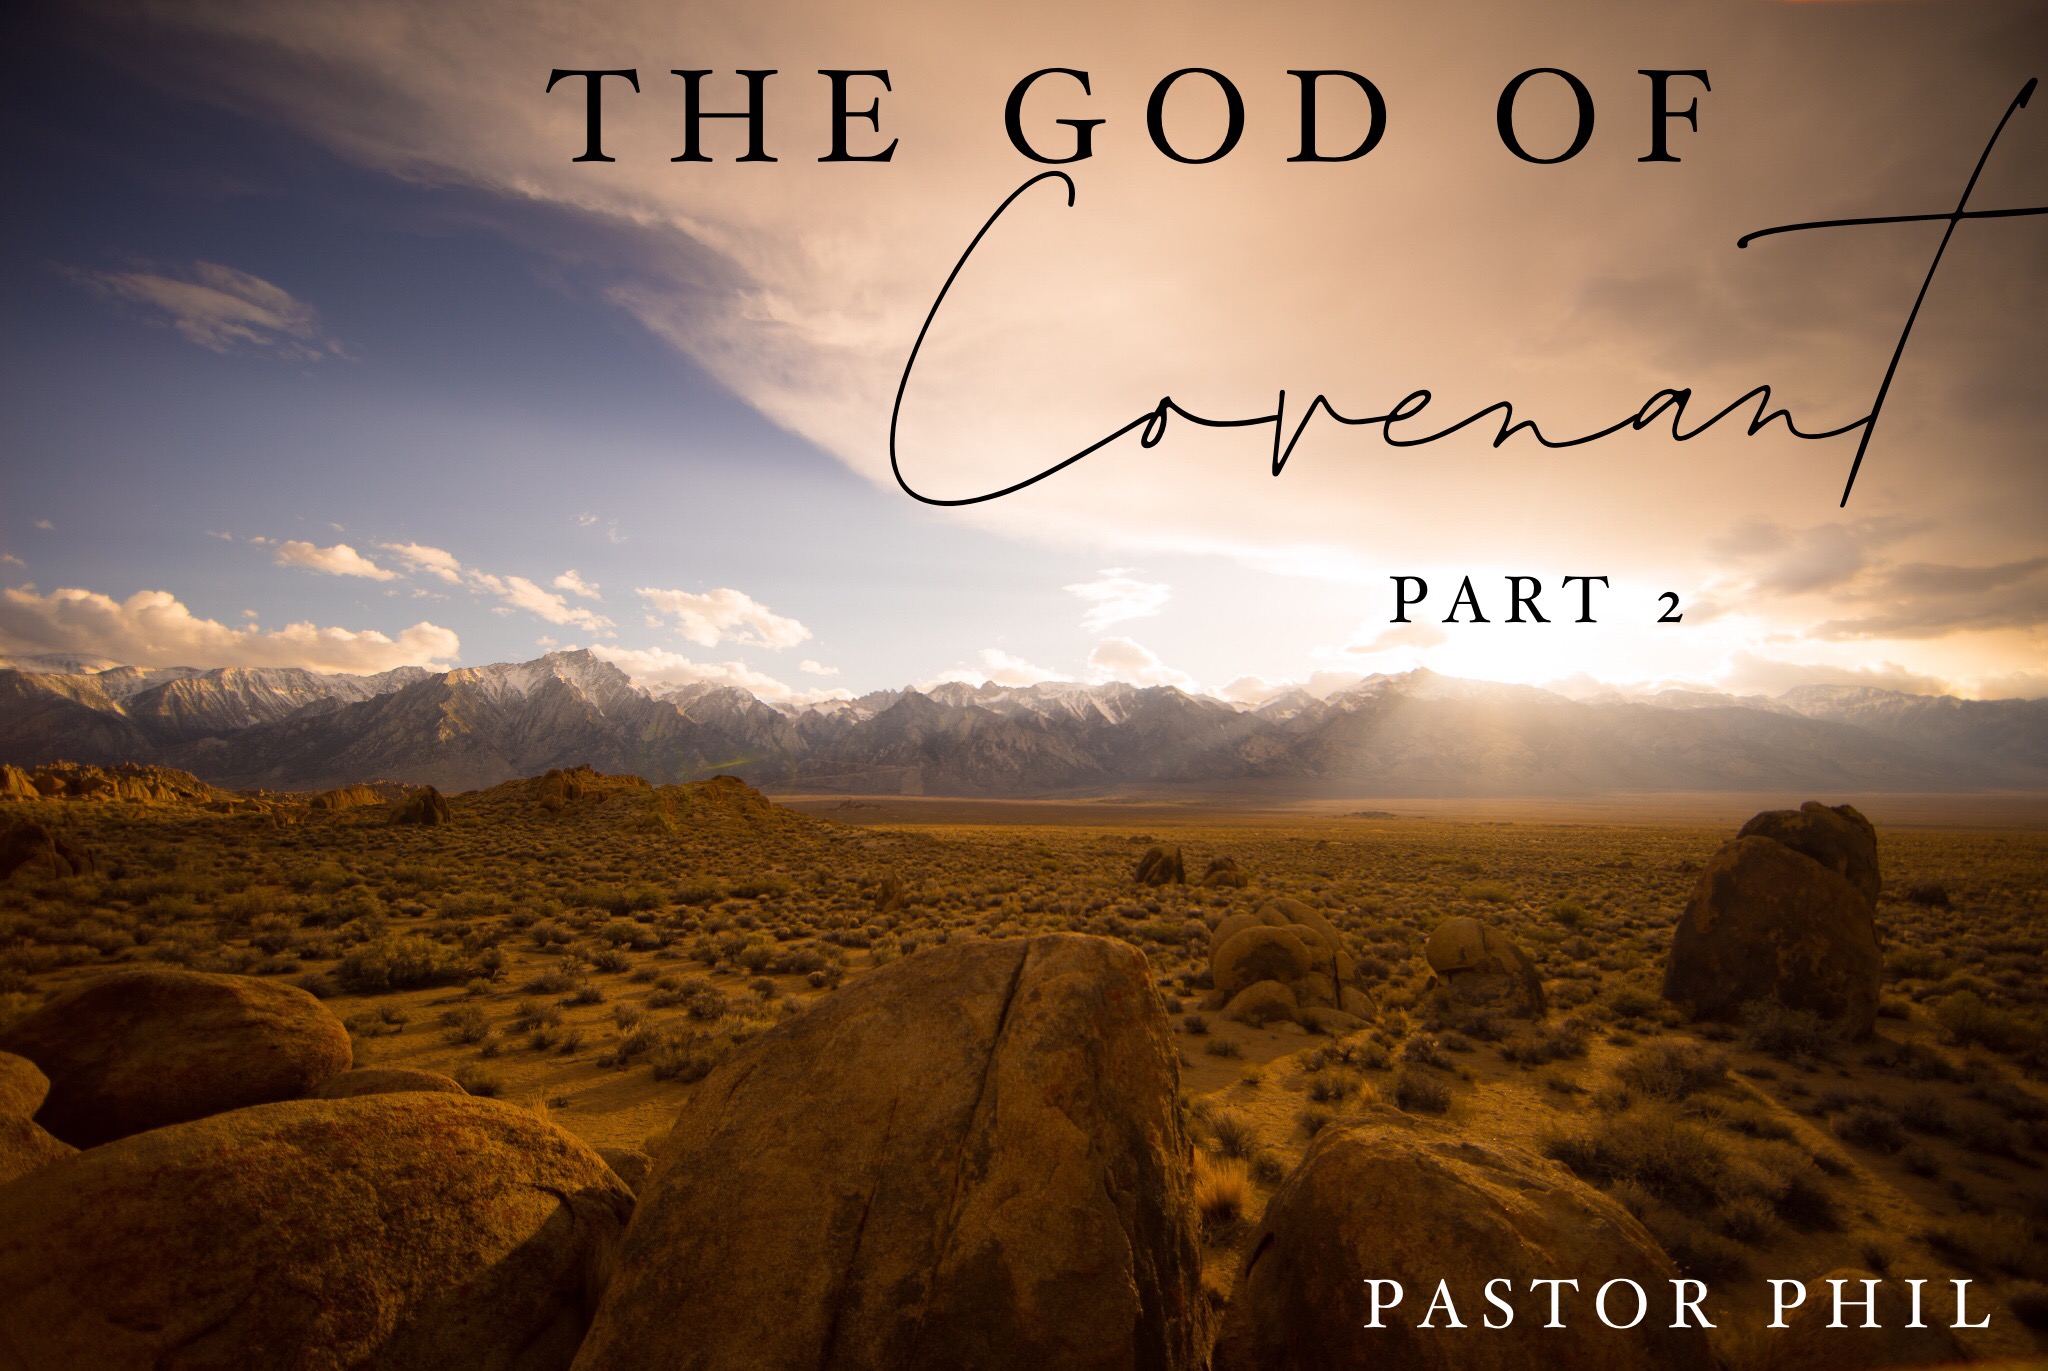 The God of Covenant Pt 2